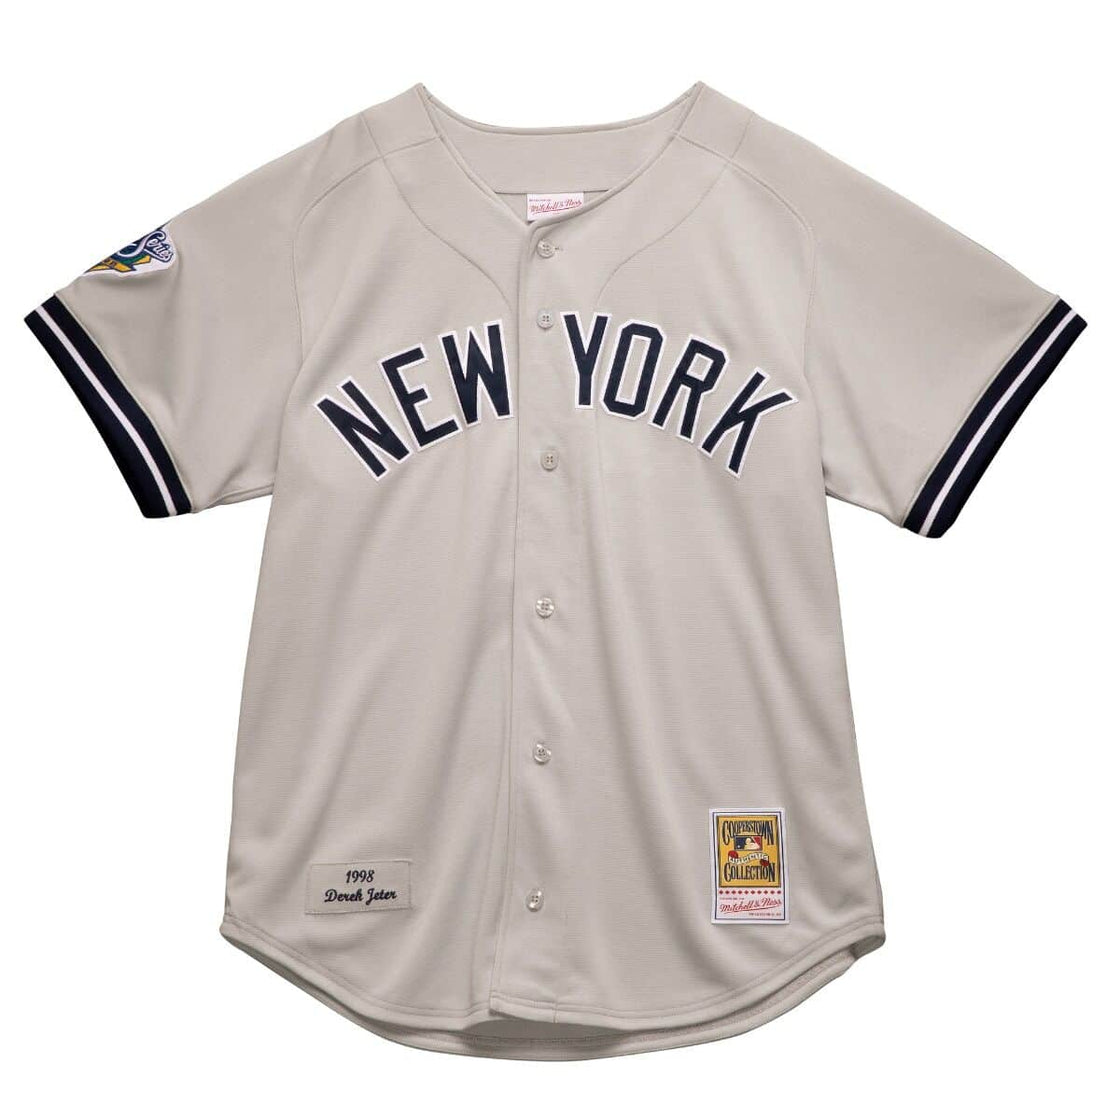 Authentic Derek Jeter New York Yankees 1998 Jersey